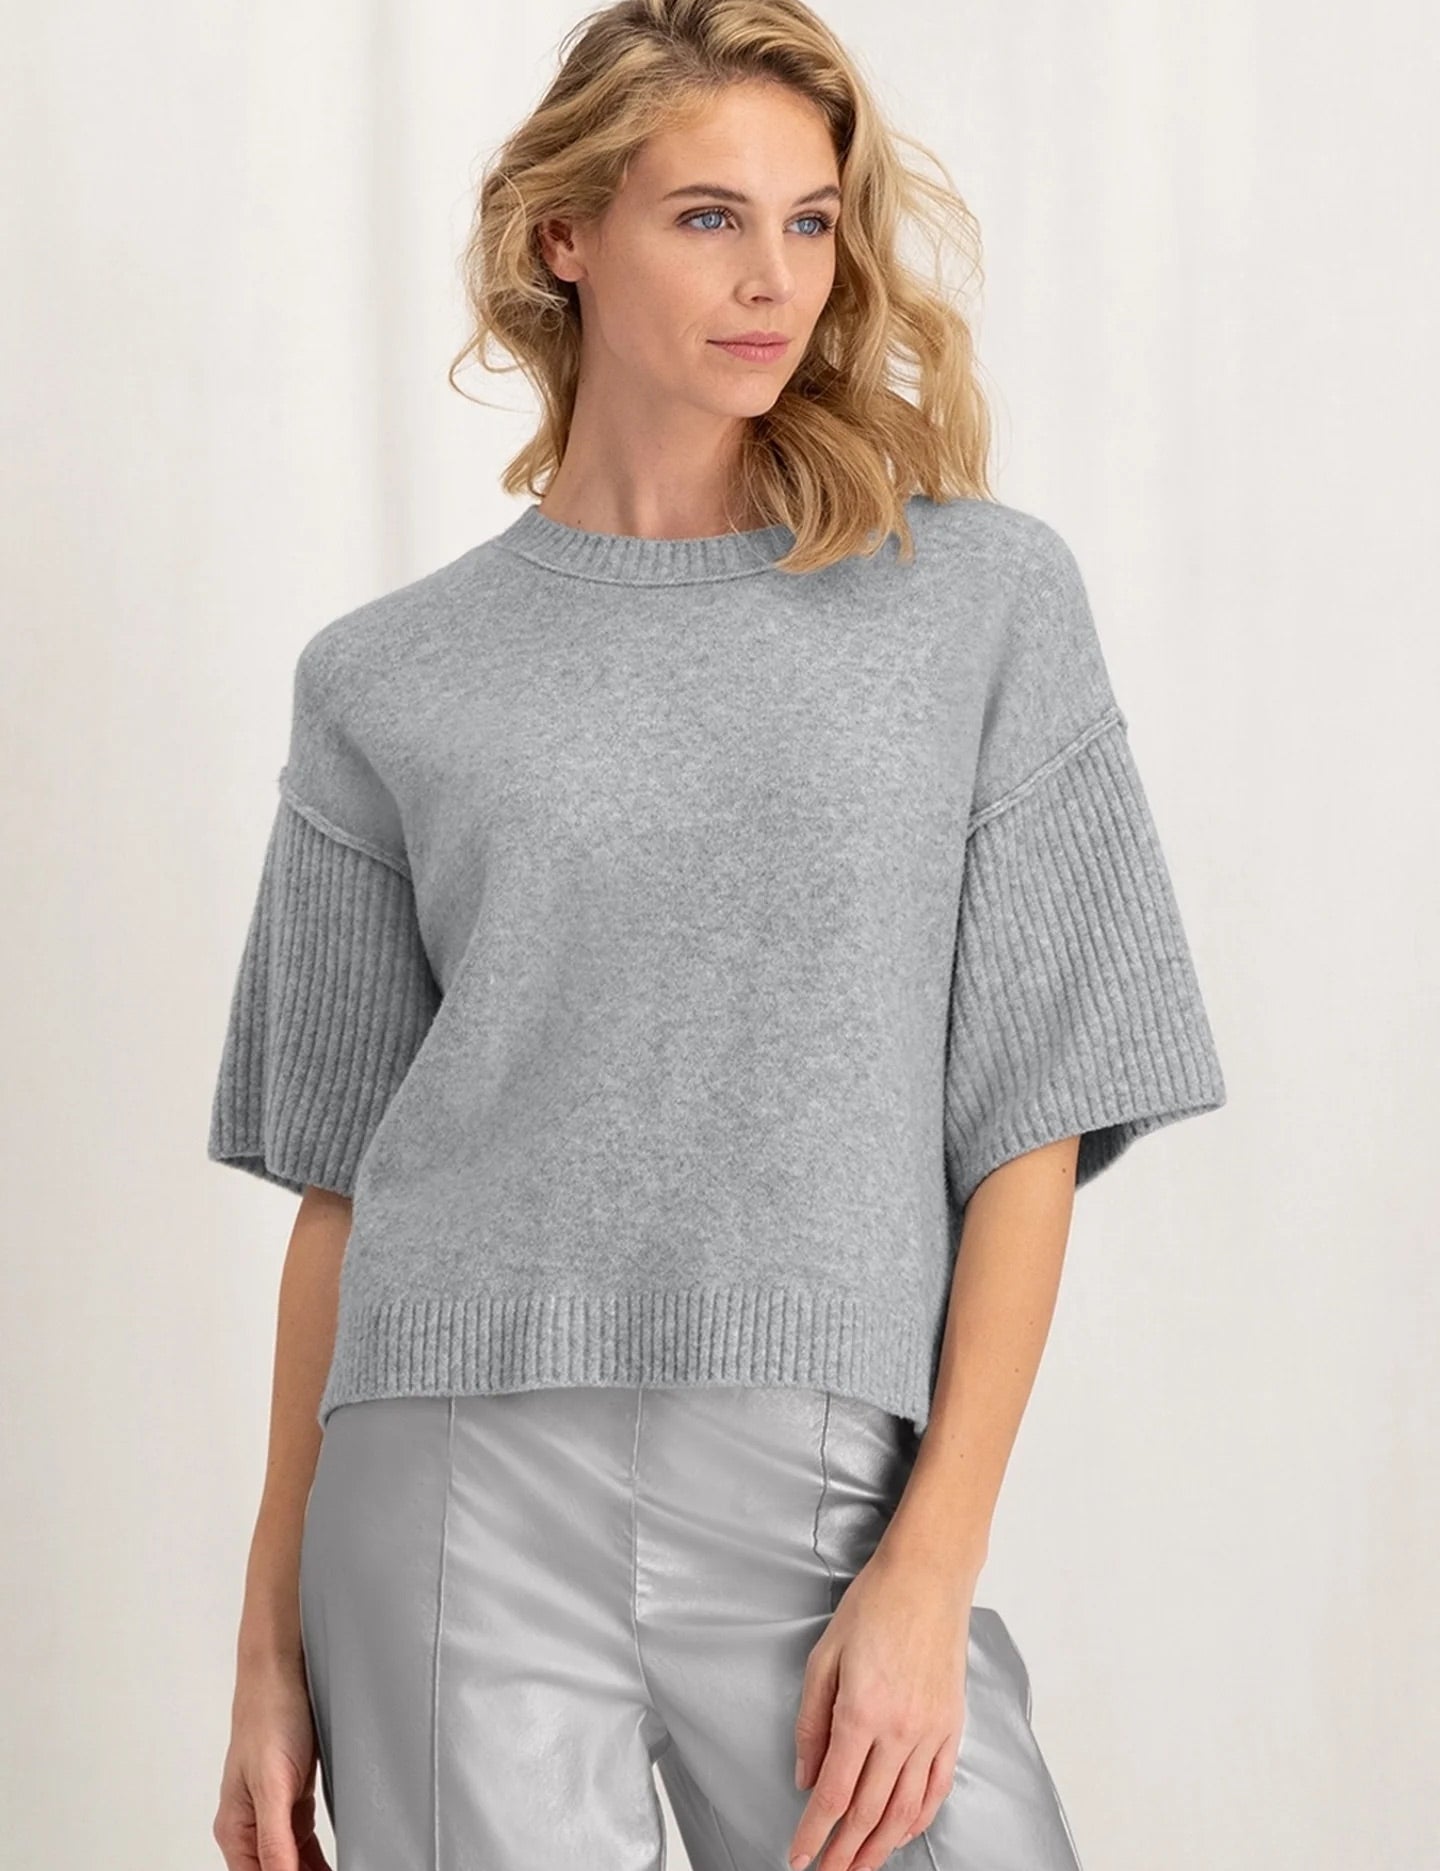 sweater-with-boatneck-wide-half-long-sleeves-in-boxy-fit-grey-melange_1f4846bd-f9b1-4716-87c7-672038548bf3_2880x_jpg.jpg